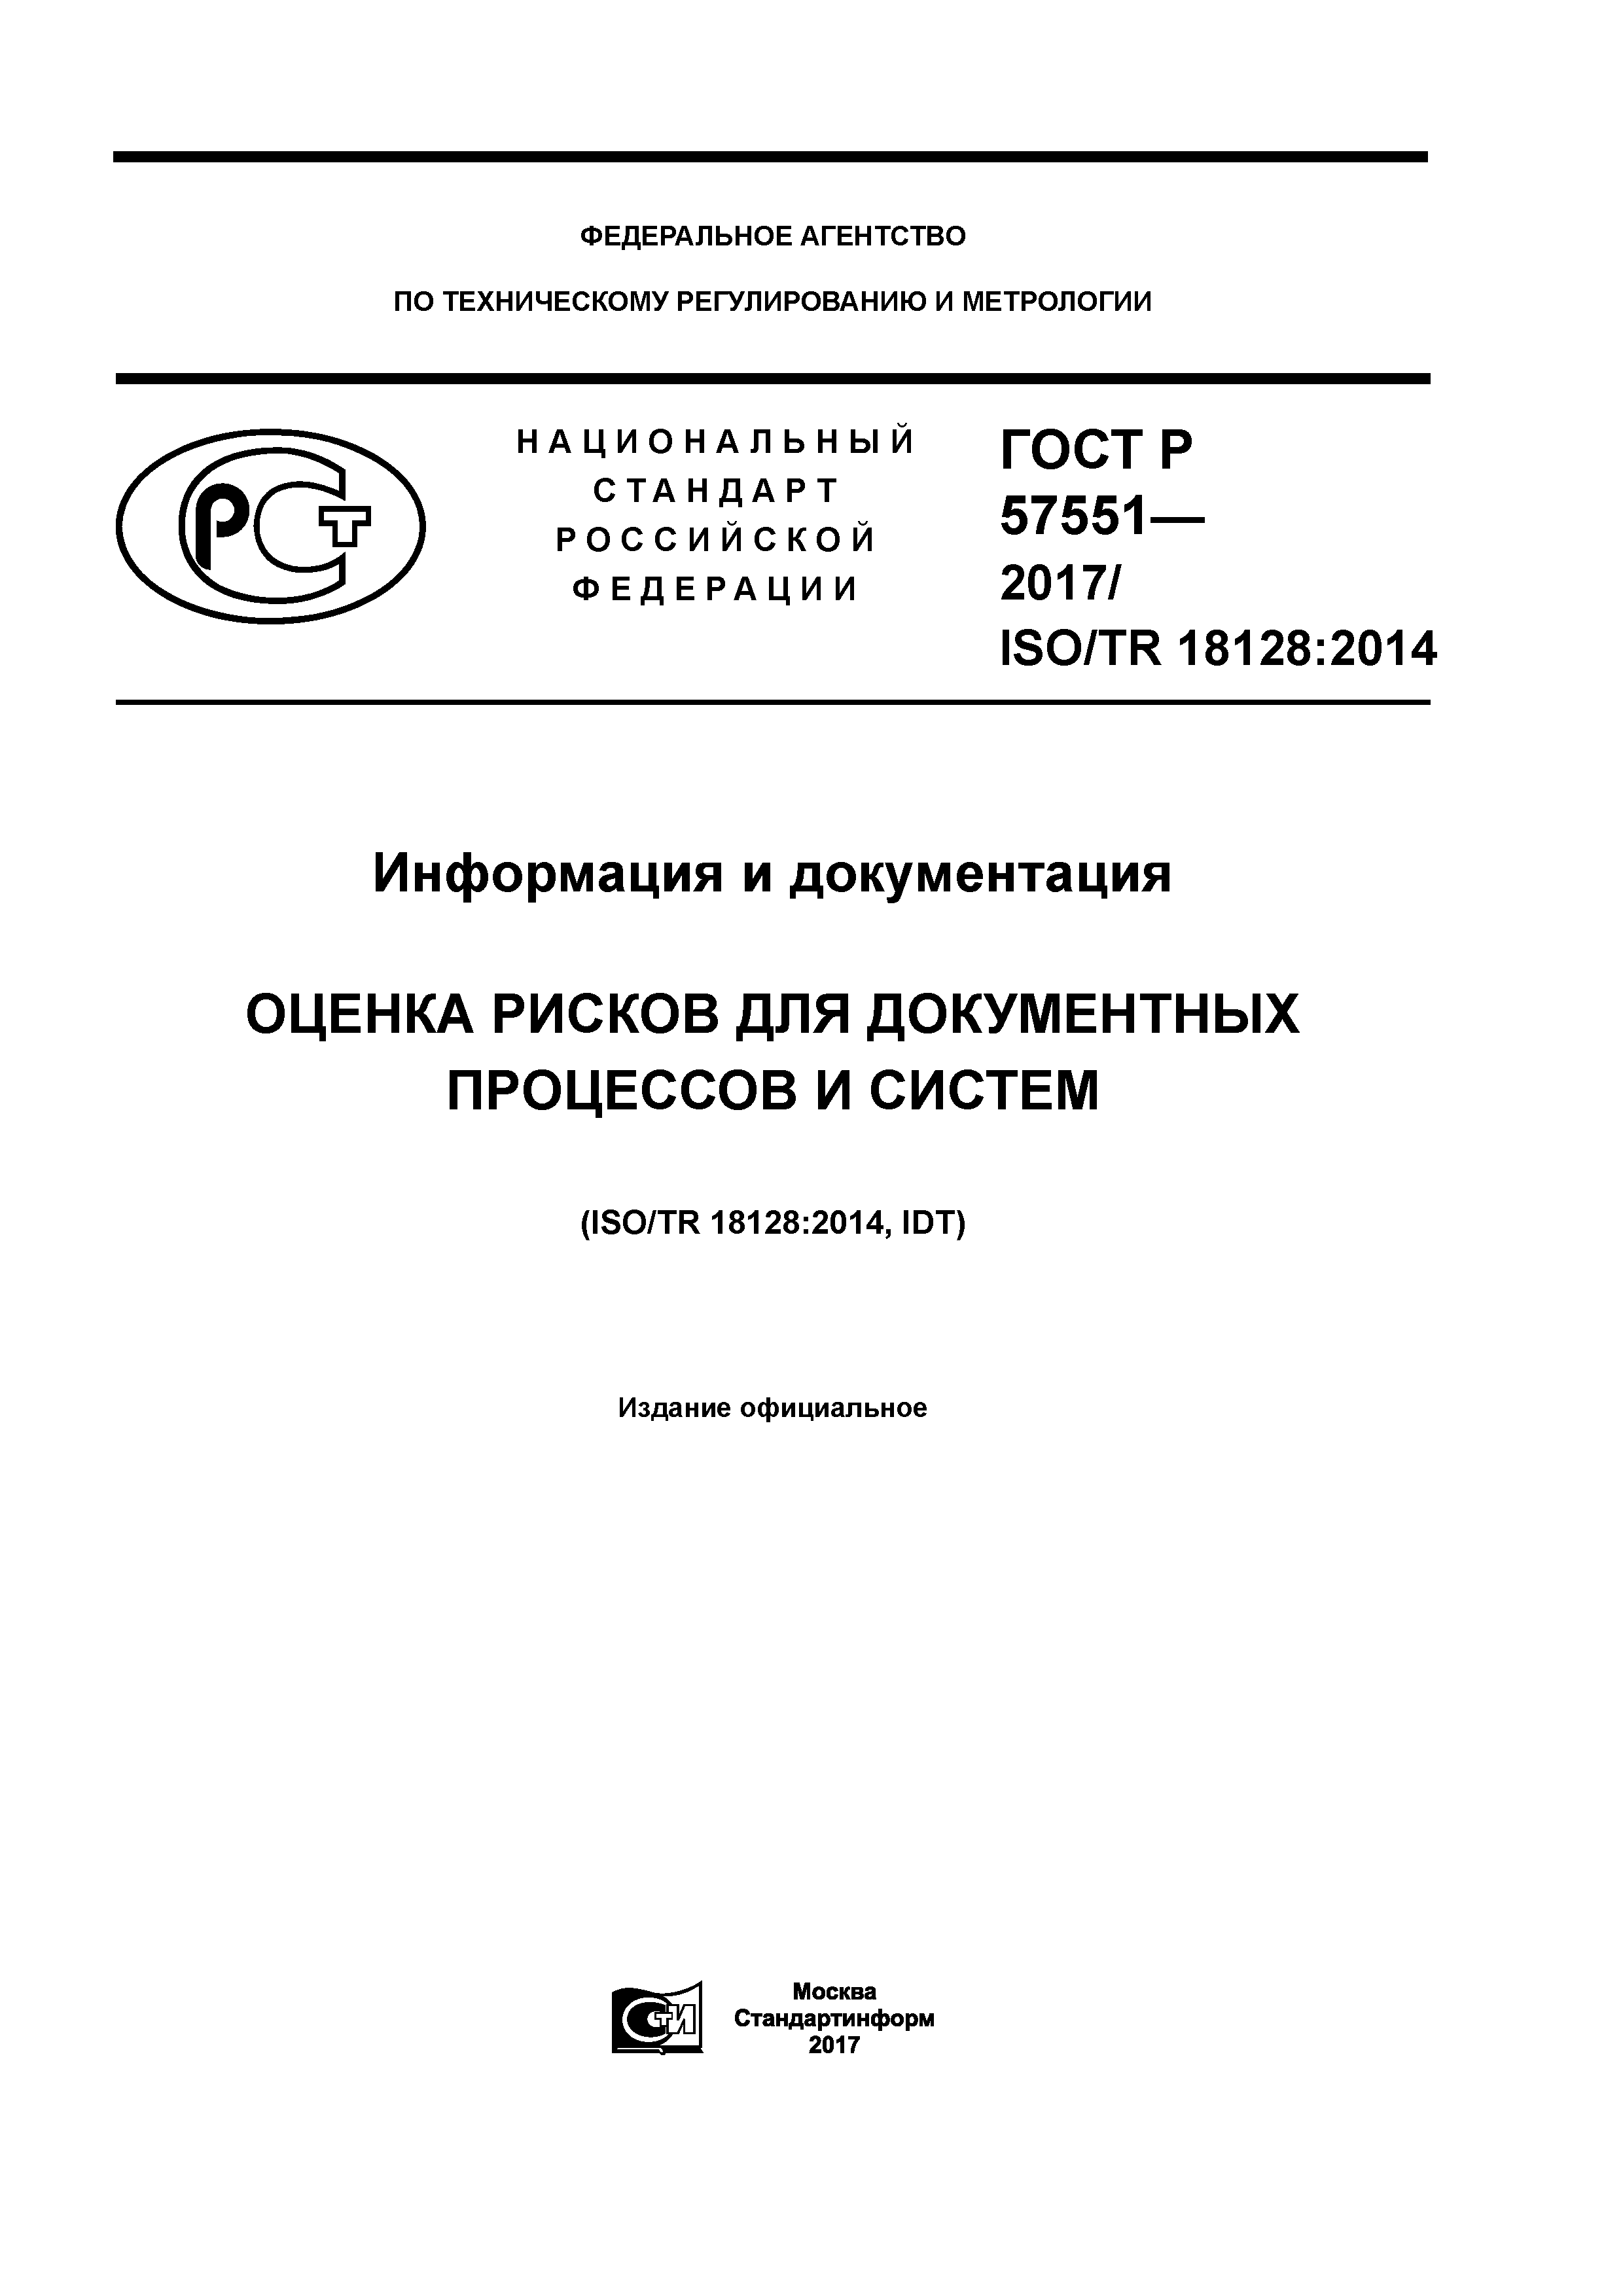 ГОСТ Р 57551-2017